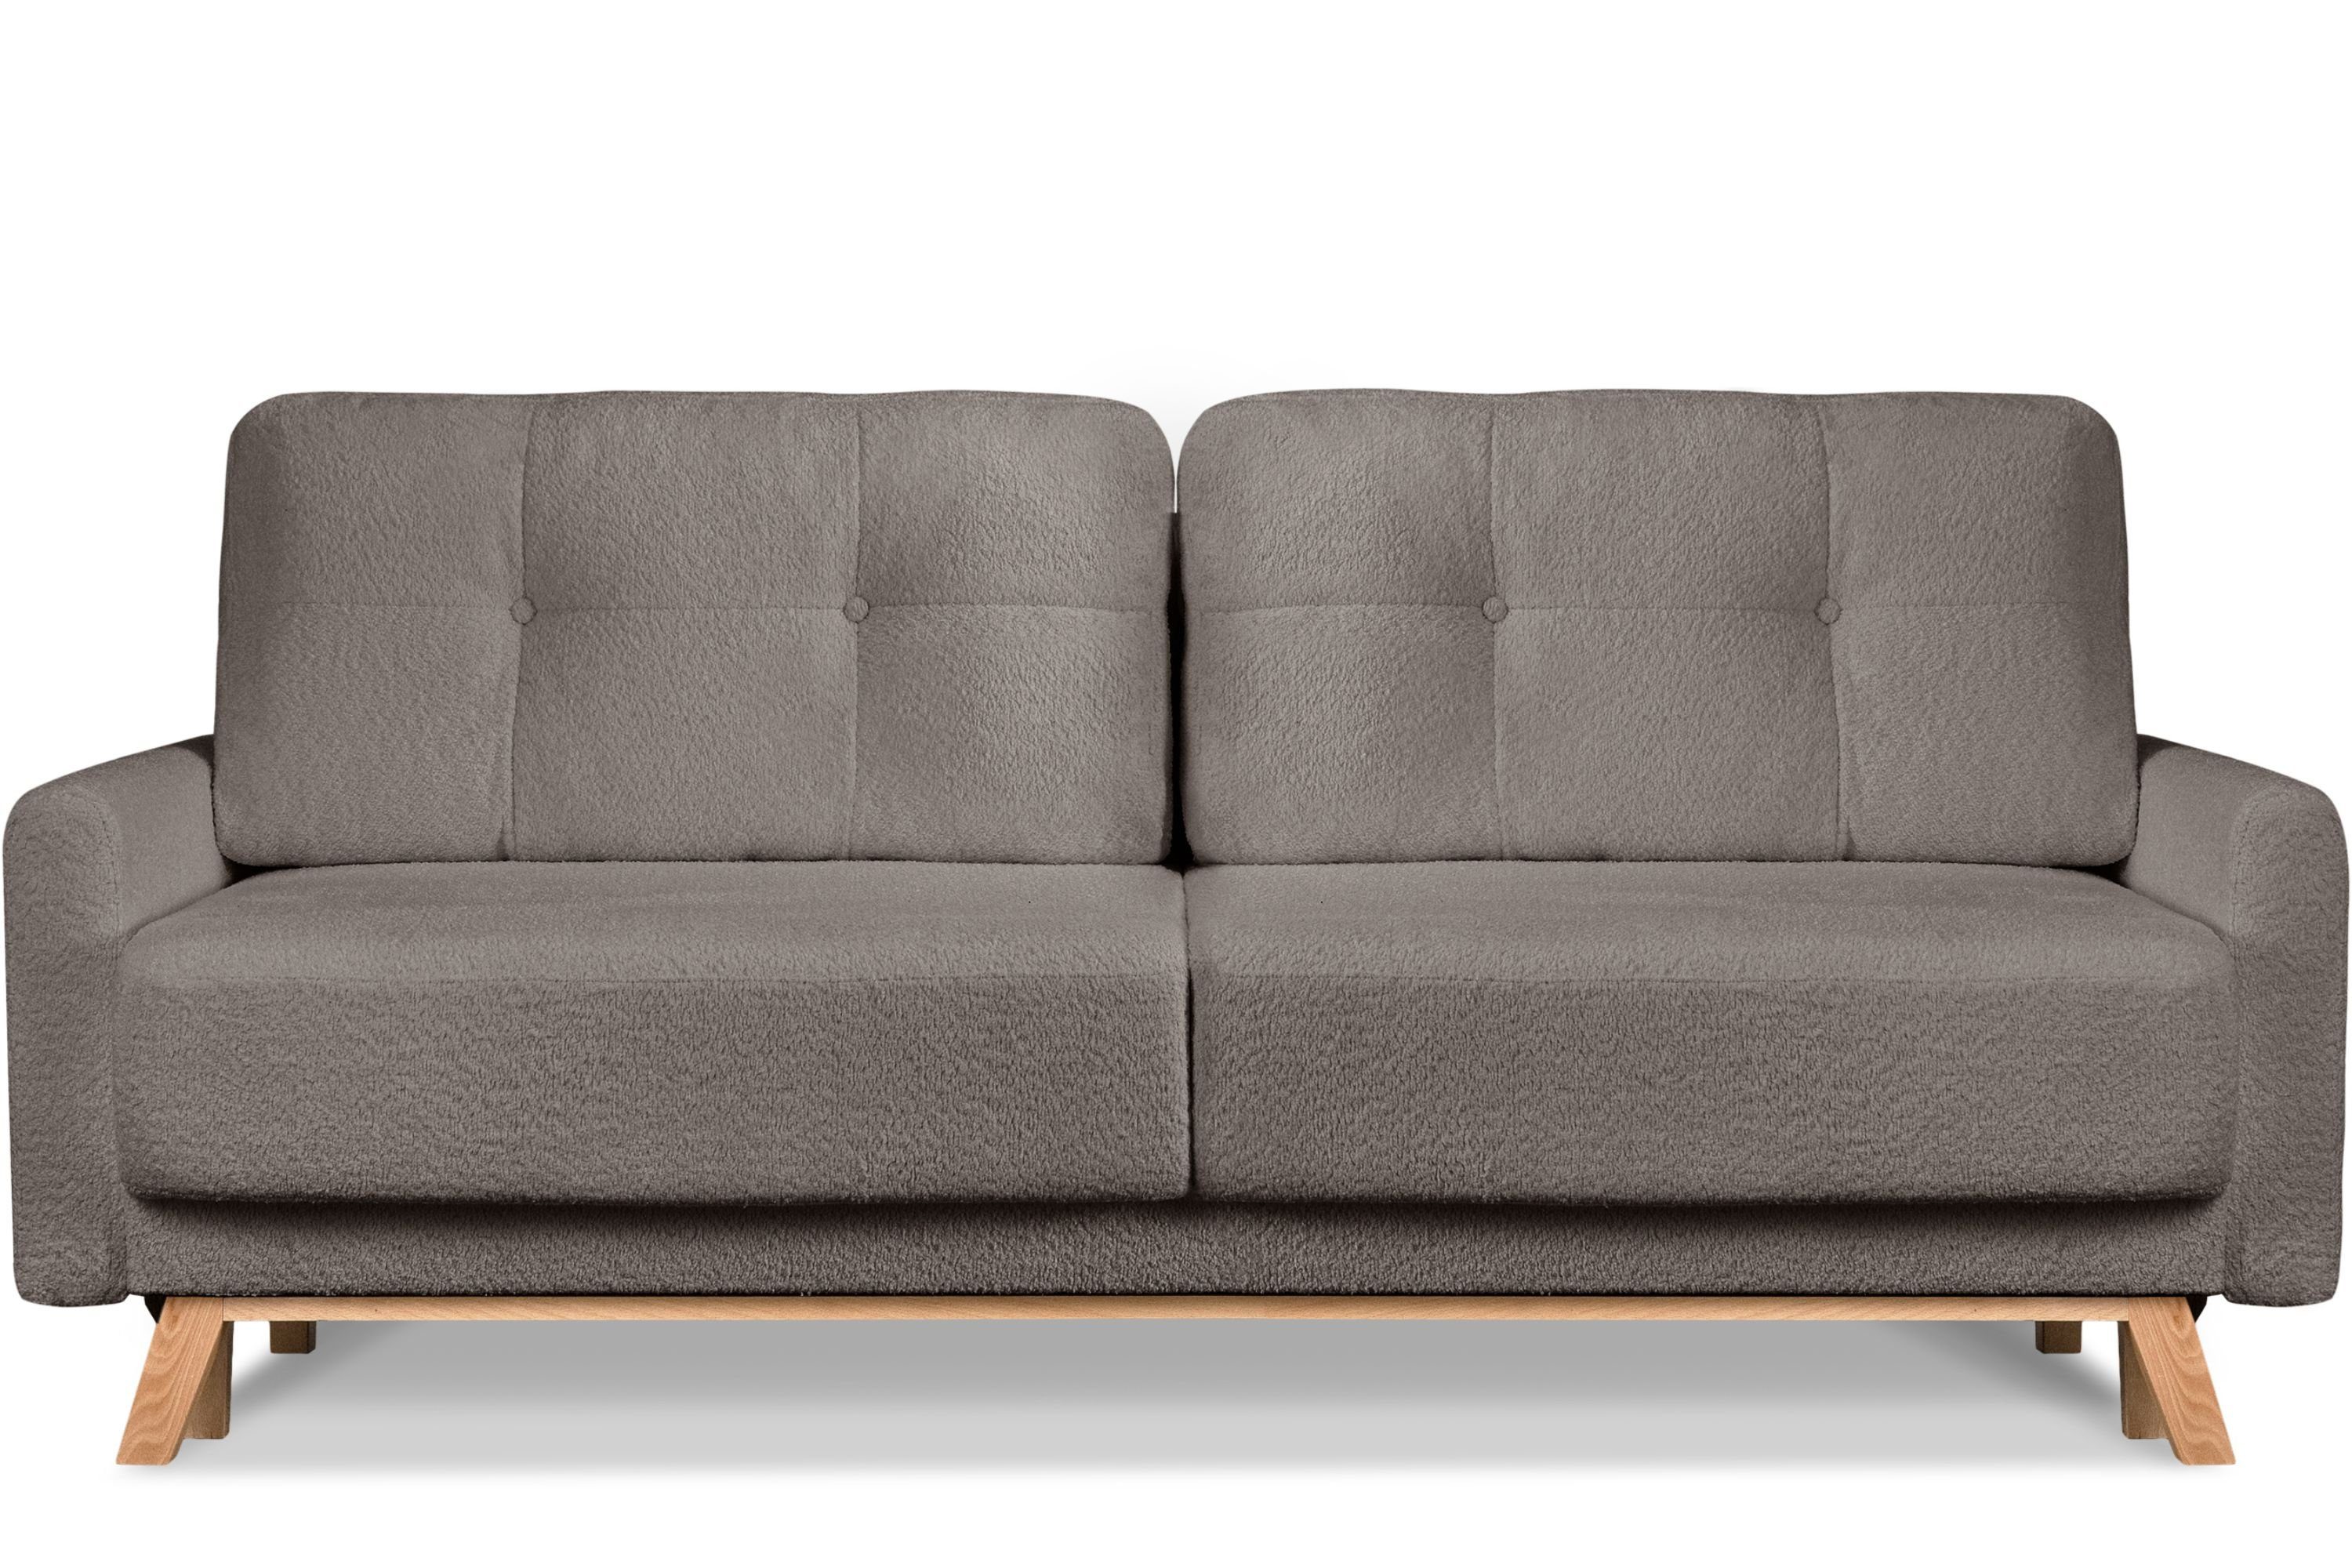 braun Liegfläche VISNA braun | 193×146 ausziehbare Sofa | braun Personen, Konsimo 3 Schlafsofa